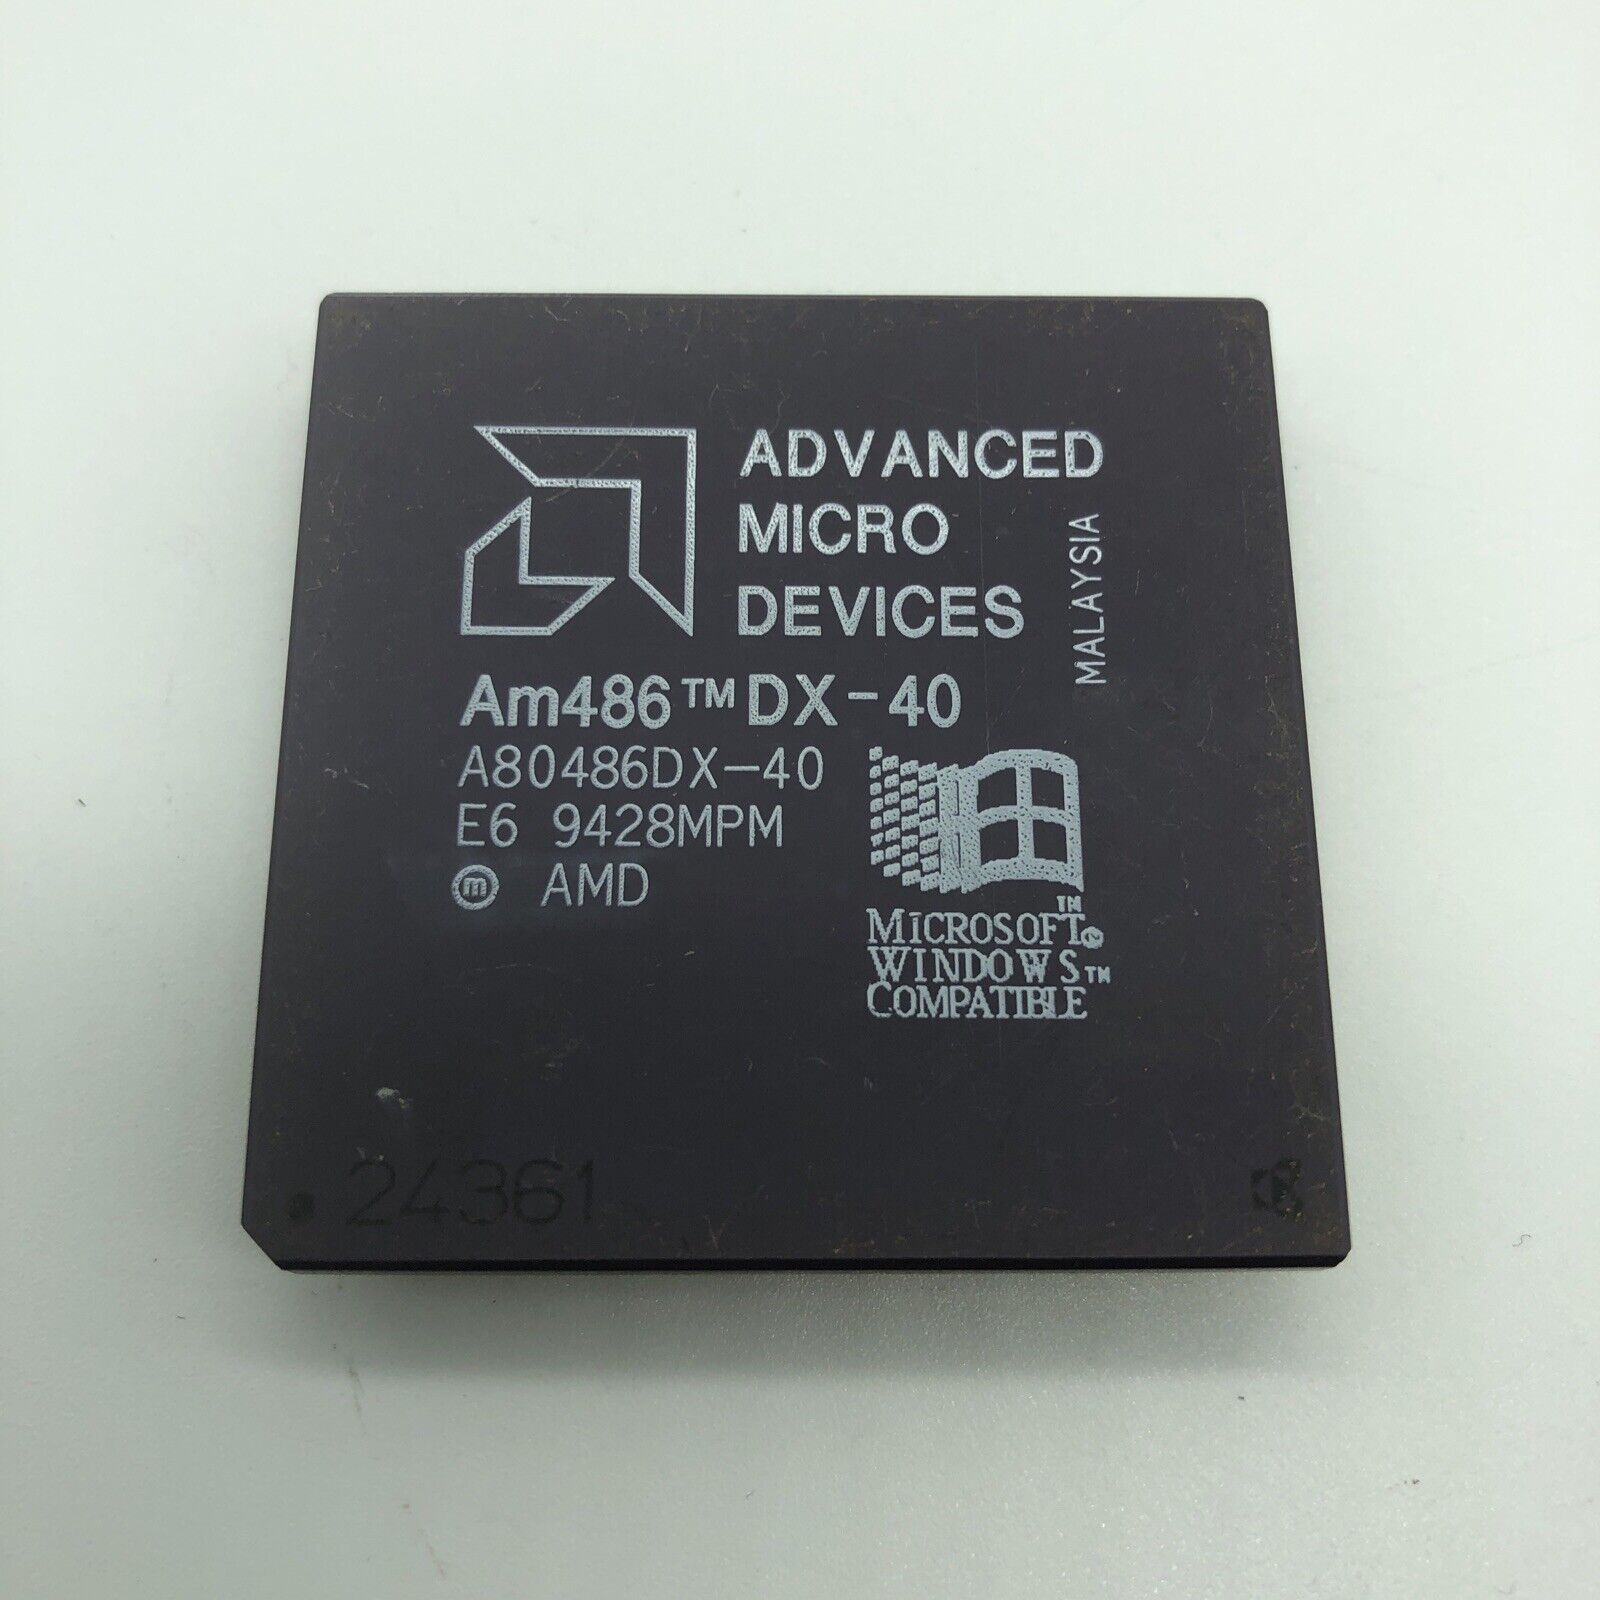 AMD 486 DX-40 MHZ CPU A80486DX-40 Very Rare Vintage Processor AM486 